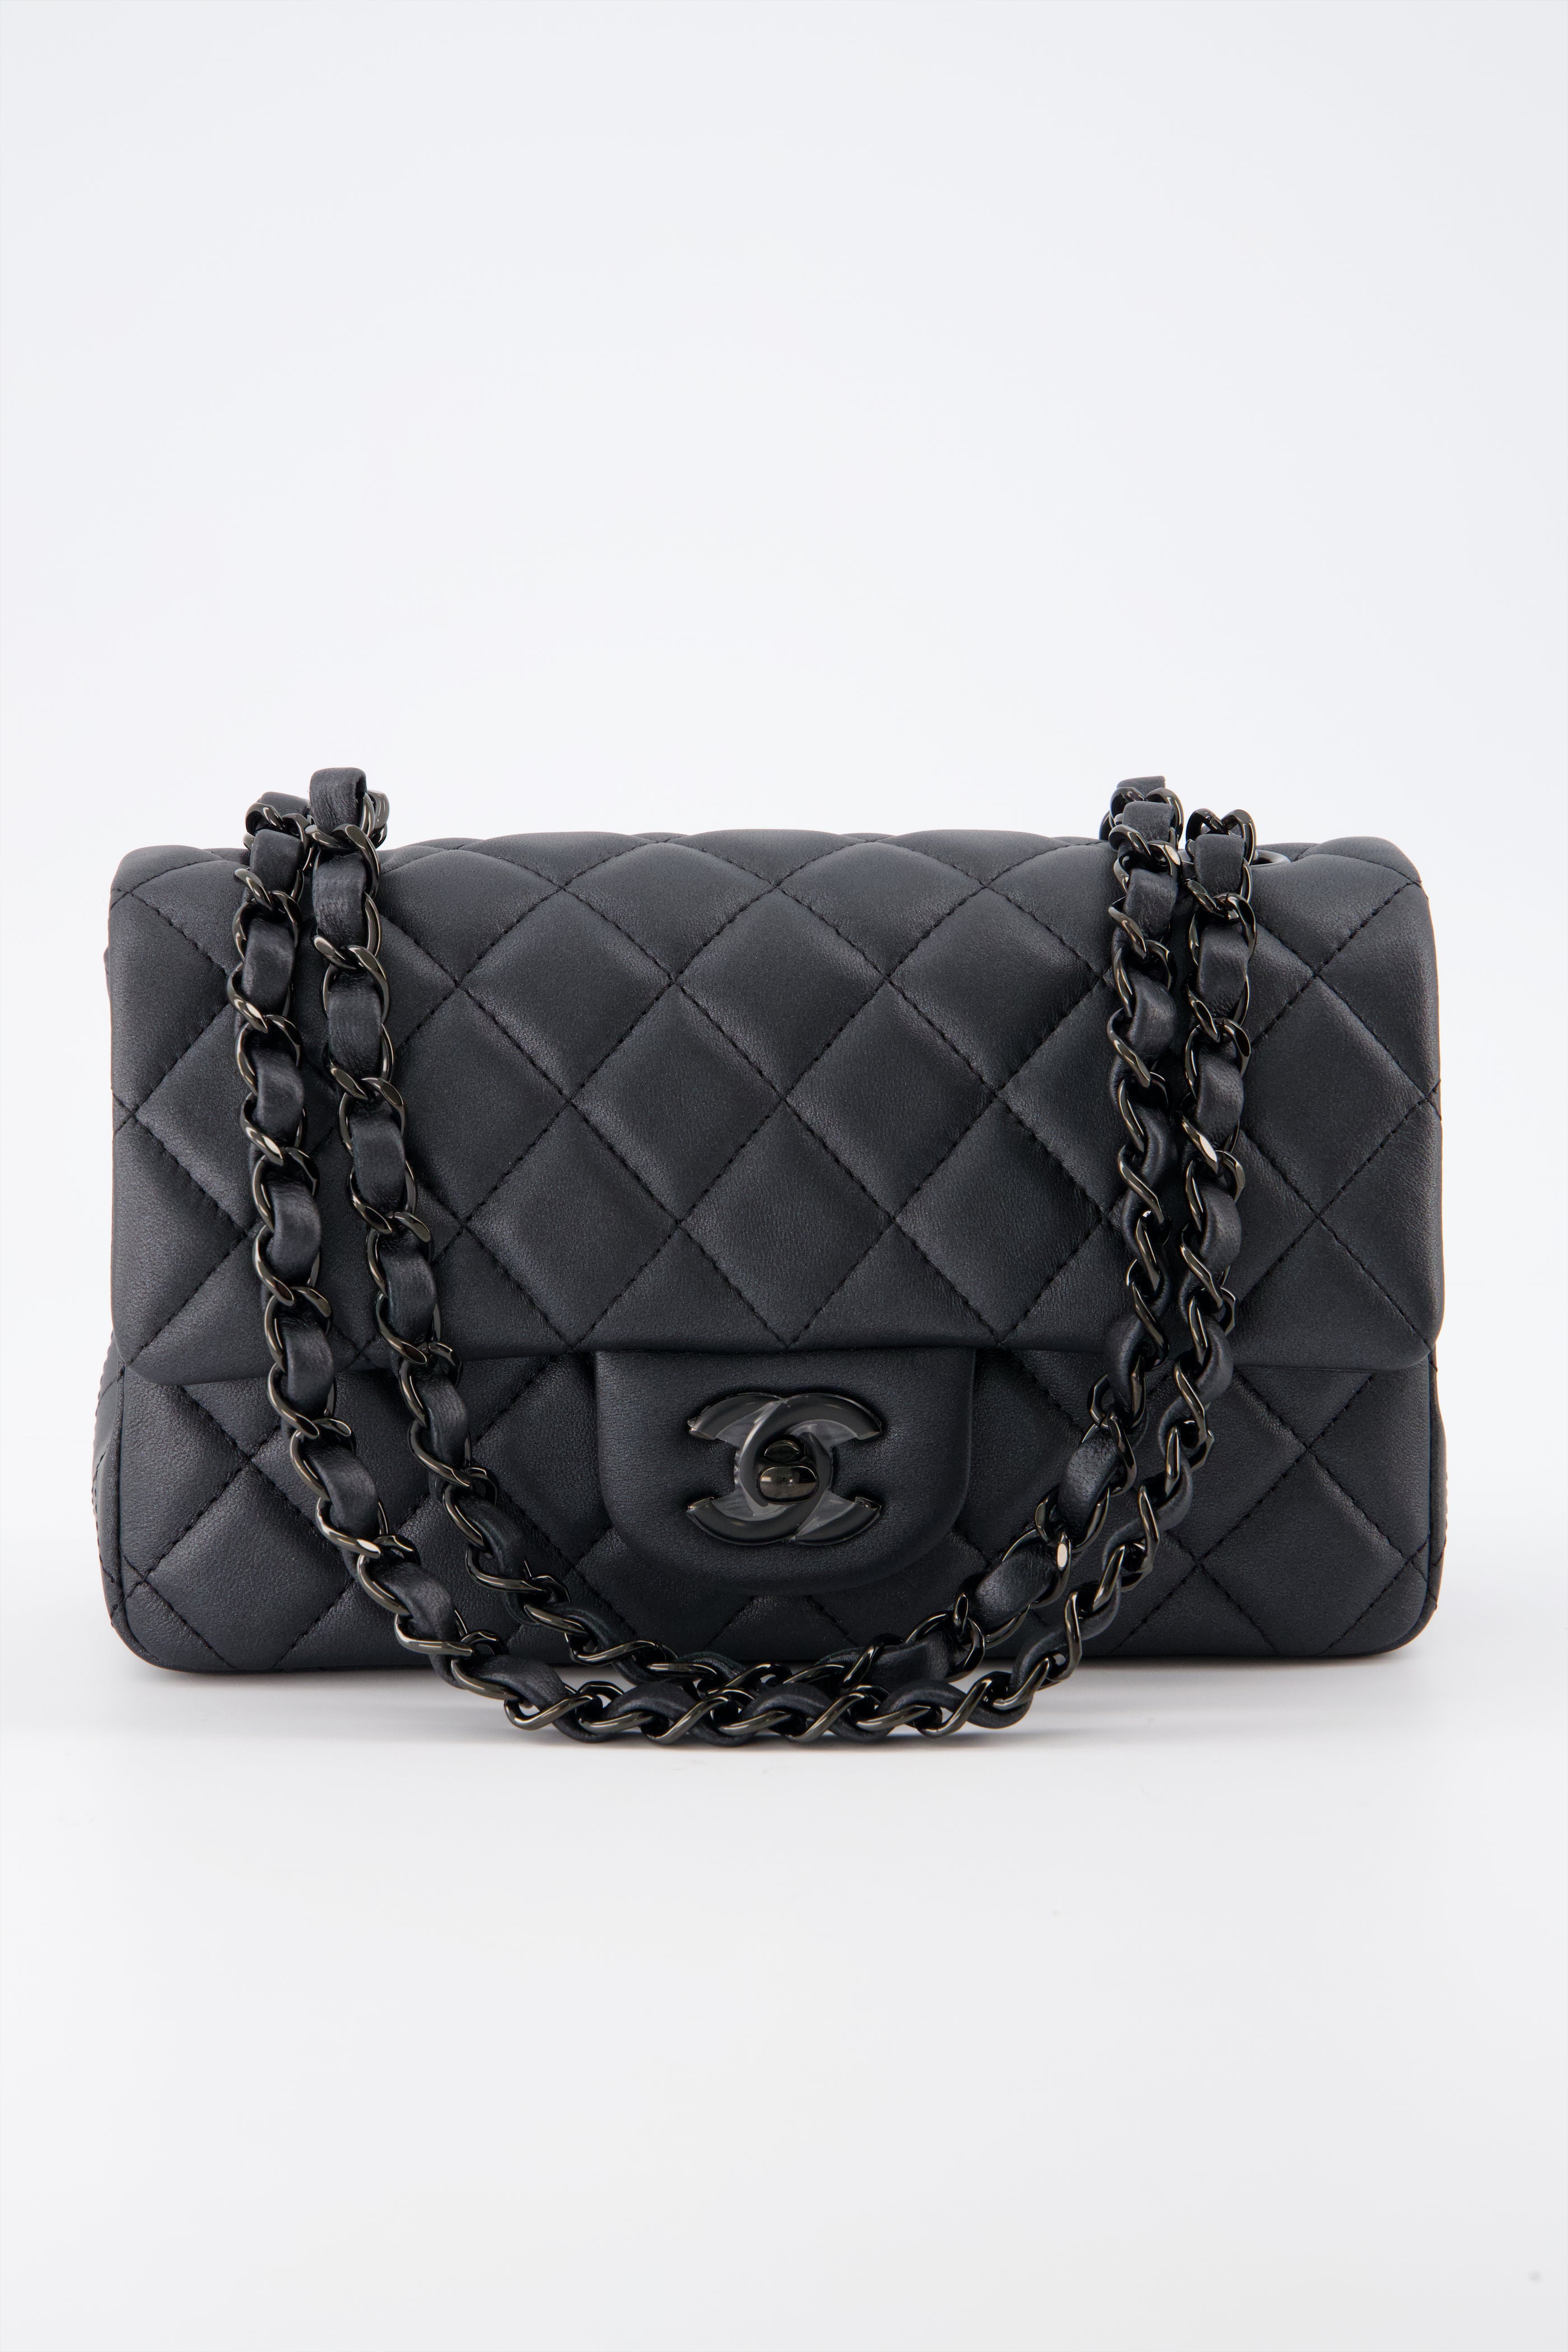 *Rare* Chanel So Black Mini Rectangular Single Flap Bag With Black Hardware